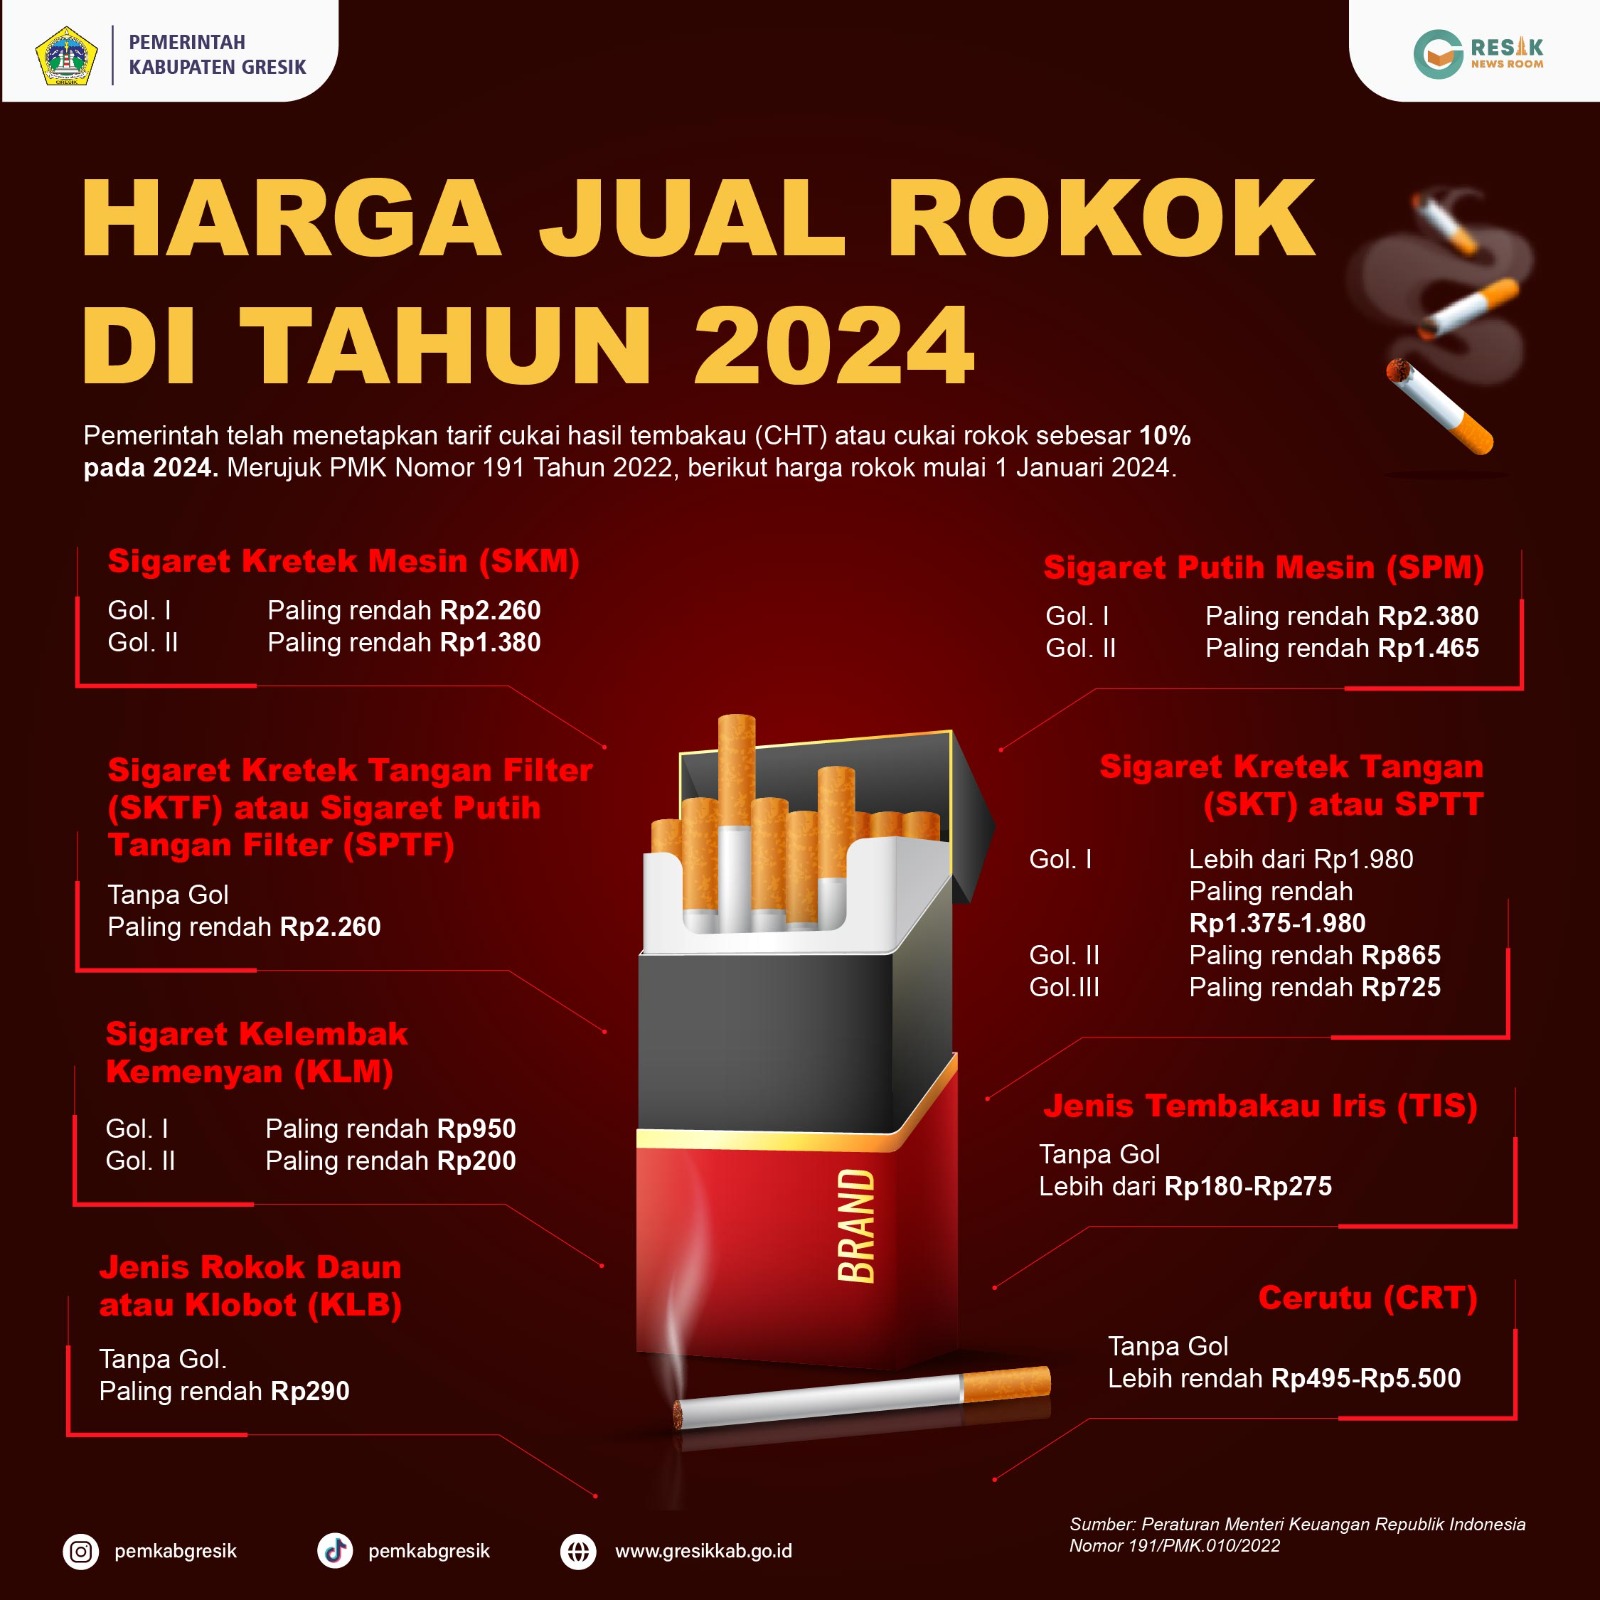 Harga Jual Rokok Di Tahun 2024